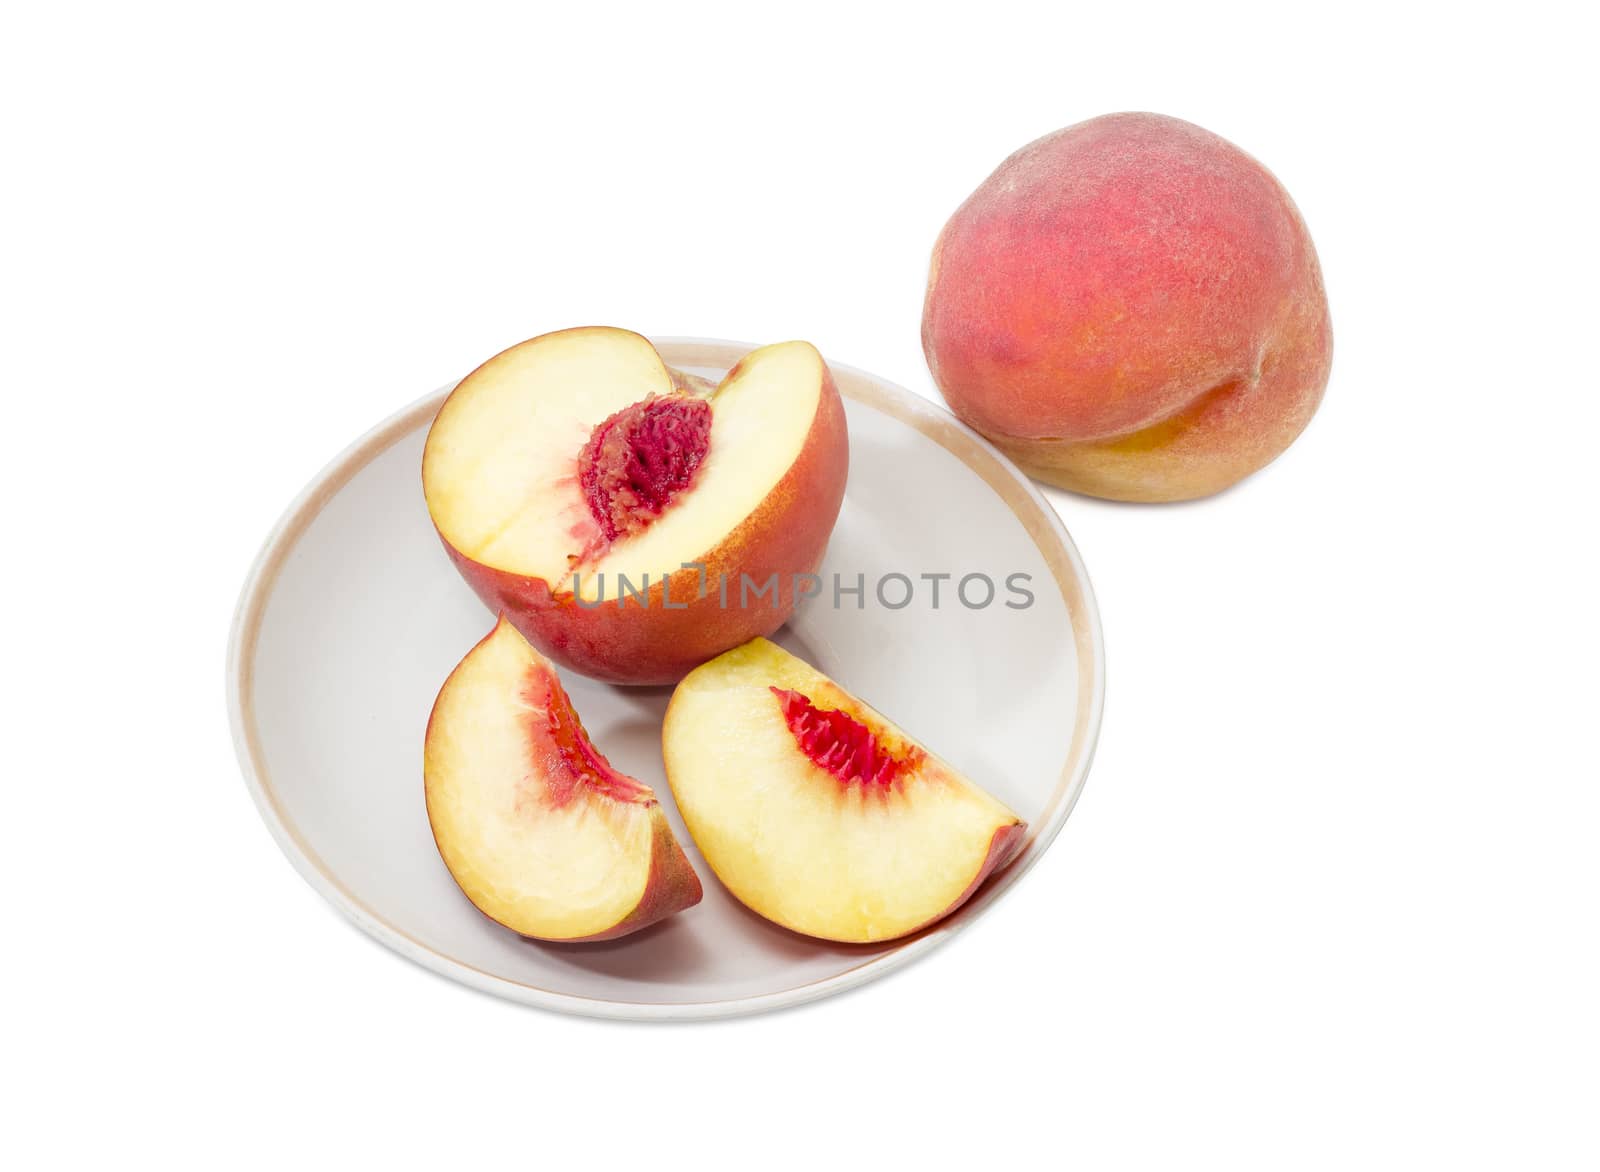 Whole peach and sliced peach on a saucer by anmbph